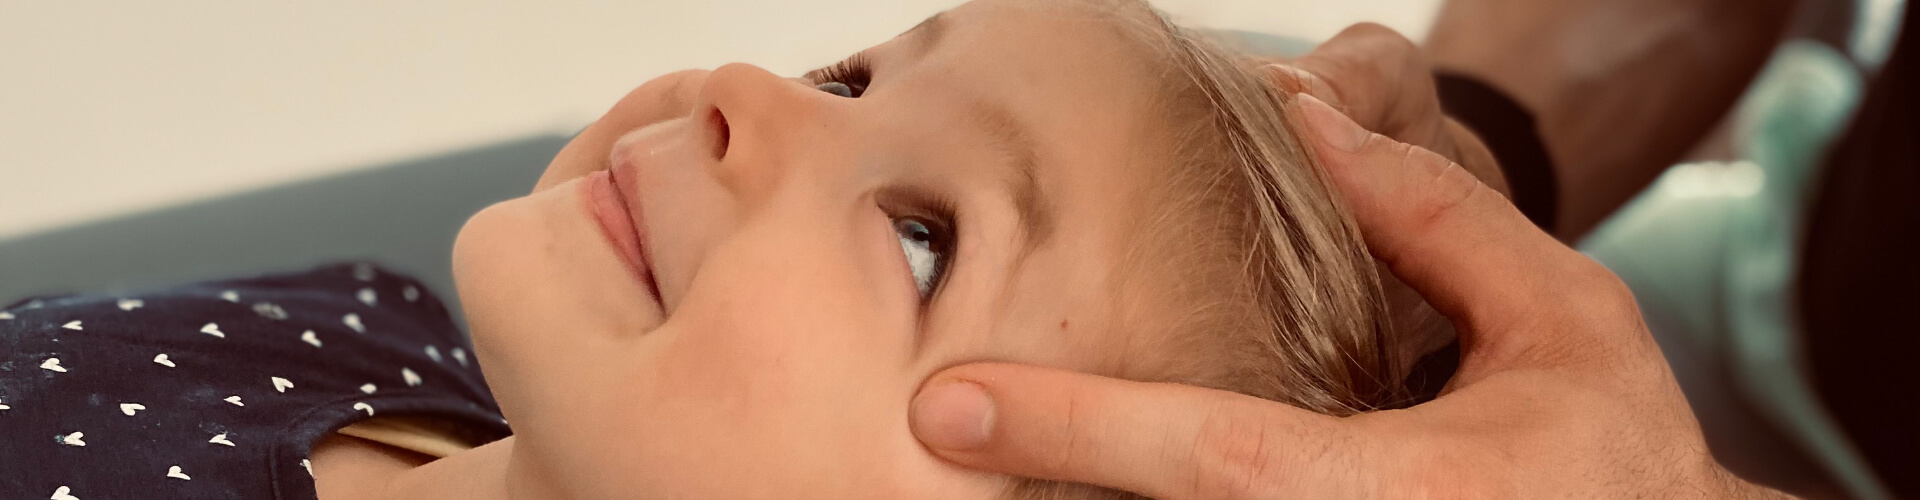 Kinderosteopathie Herne: Kinderosteopath behandelt den Kopf eines Kindes